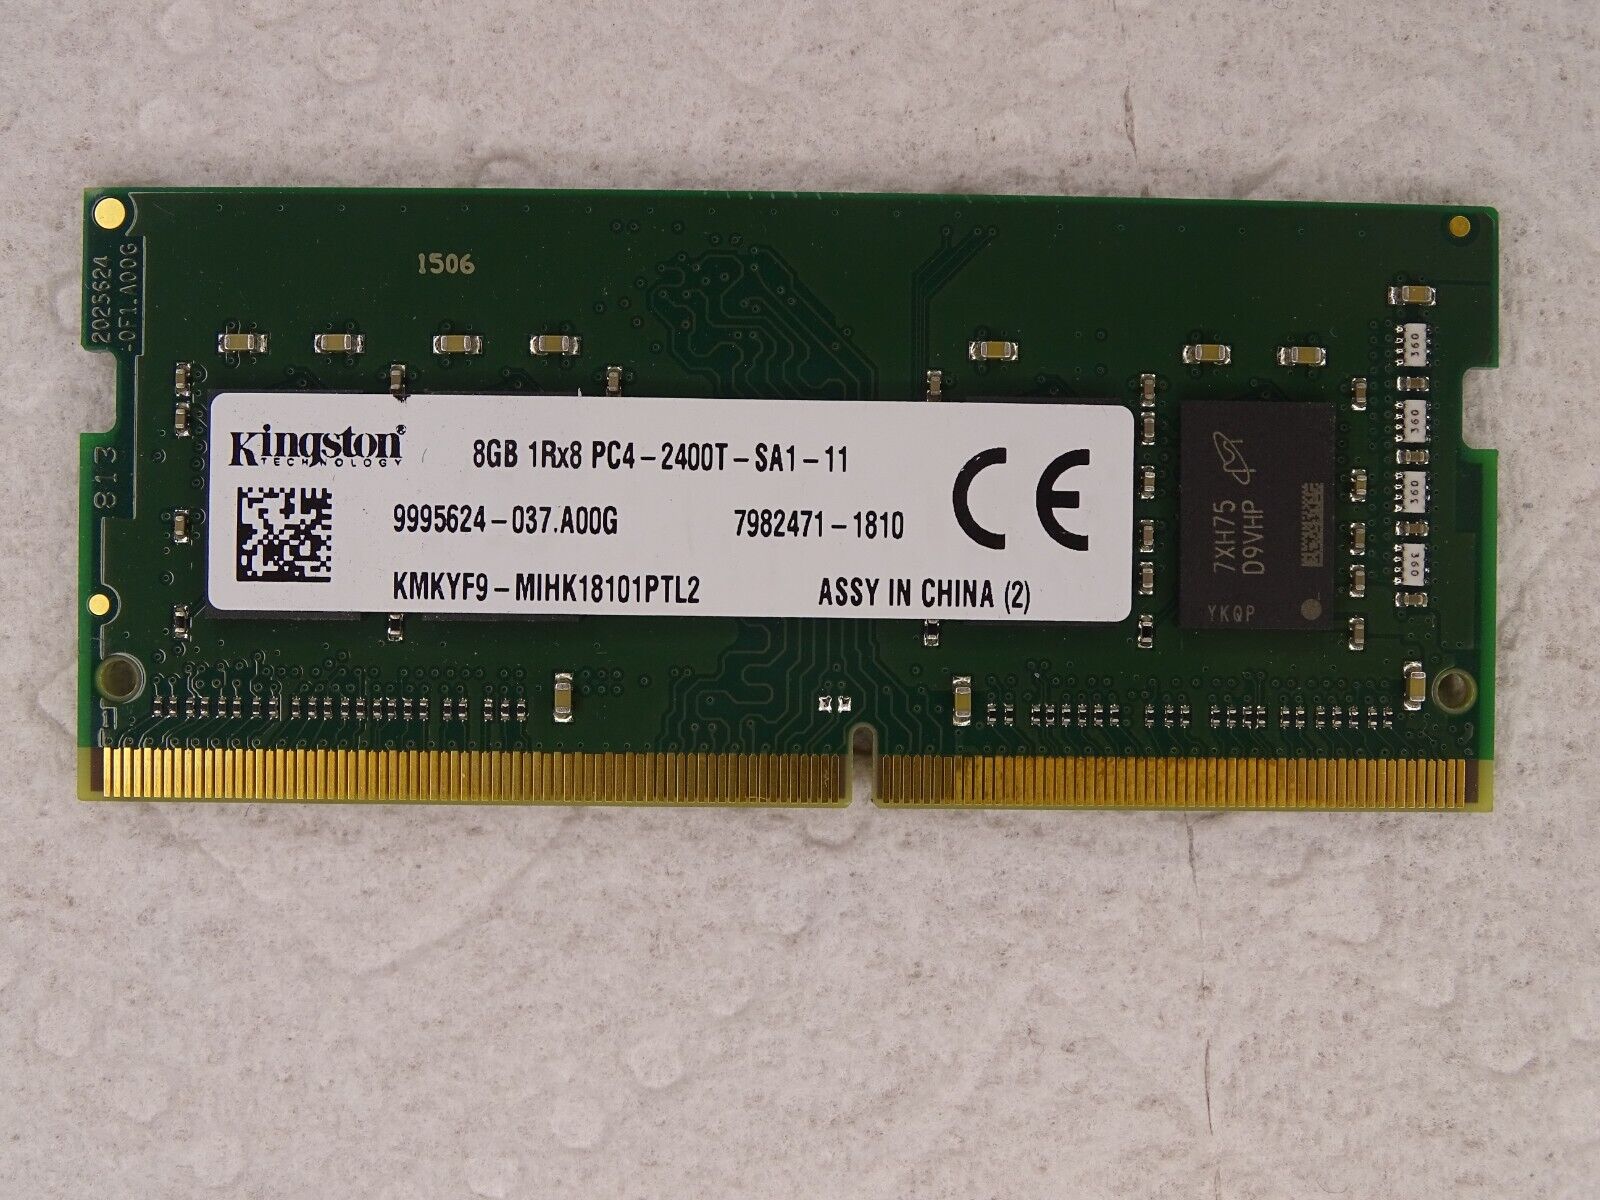 Kingston 8GB 1Rx8 PC4-2400T Laptop RAM Memory KMKYF9-MIHK18101PTL2